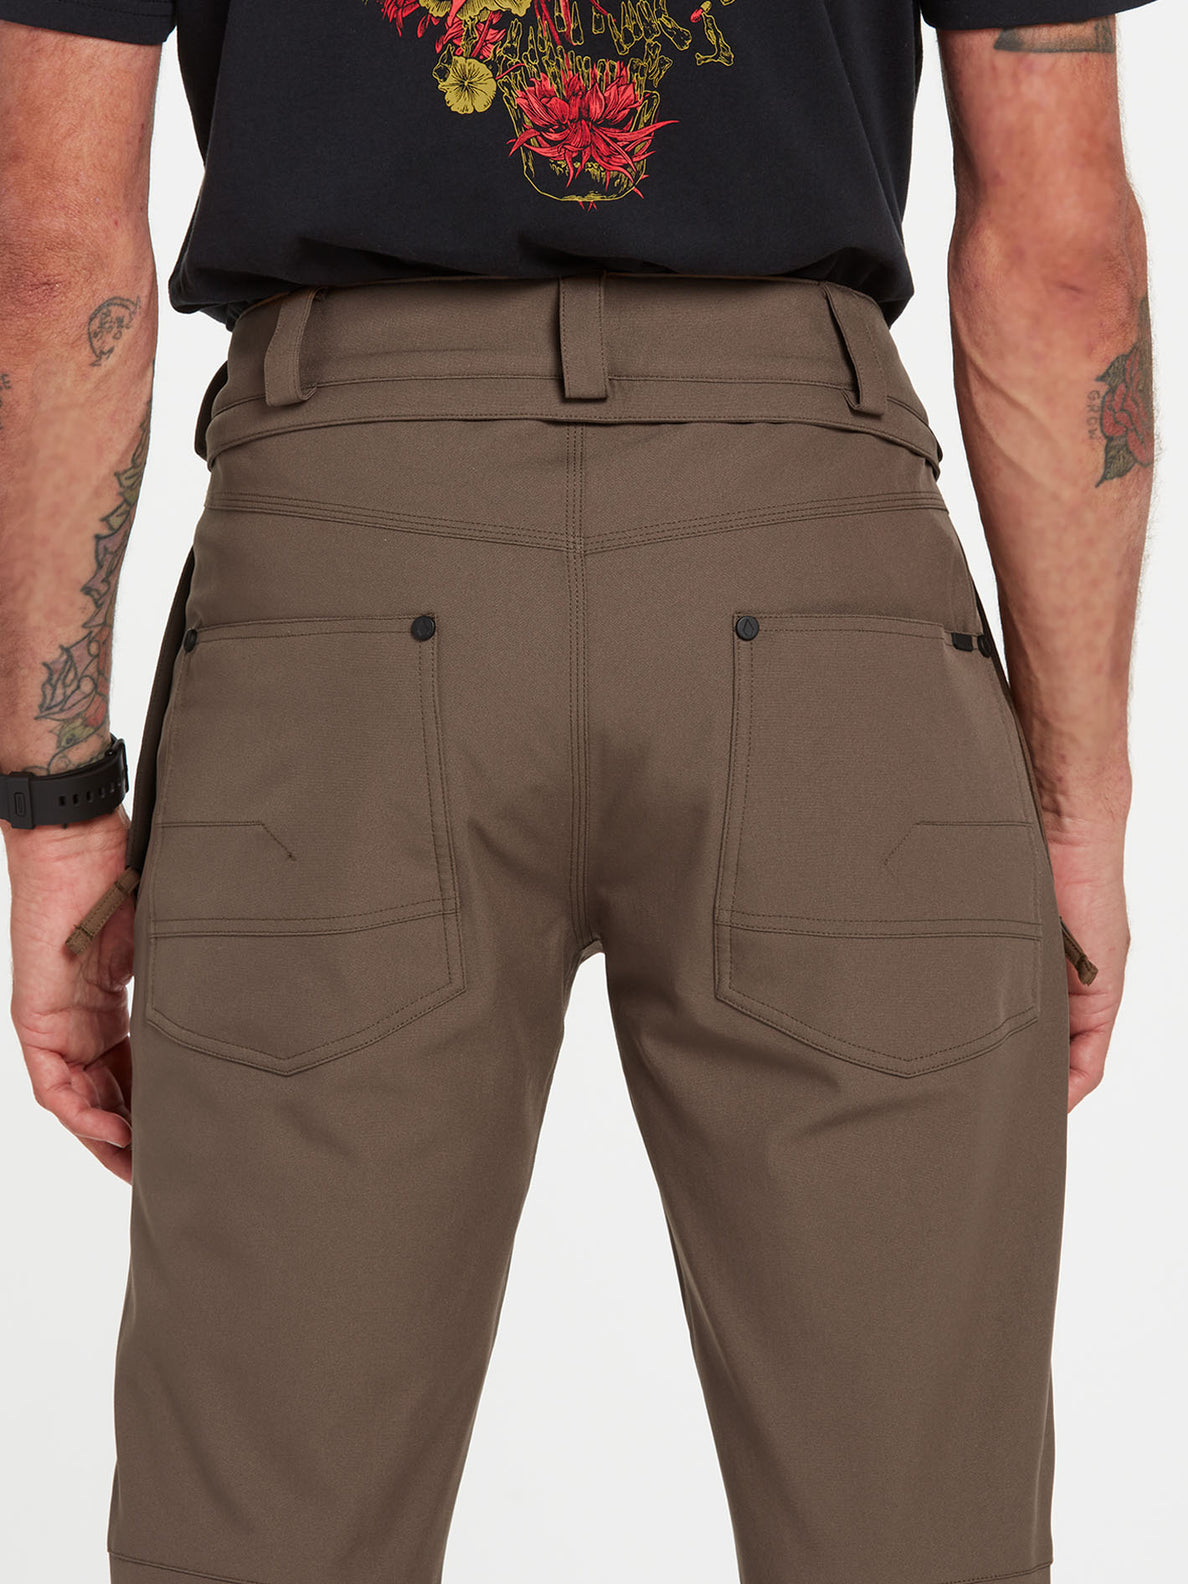 Klocker Tight Trousers - DARK GREY (G1352209_DGR) [2]